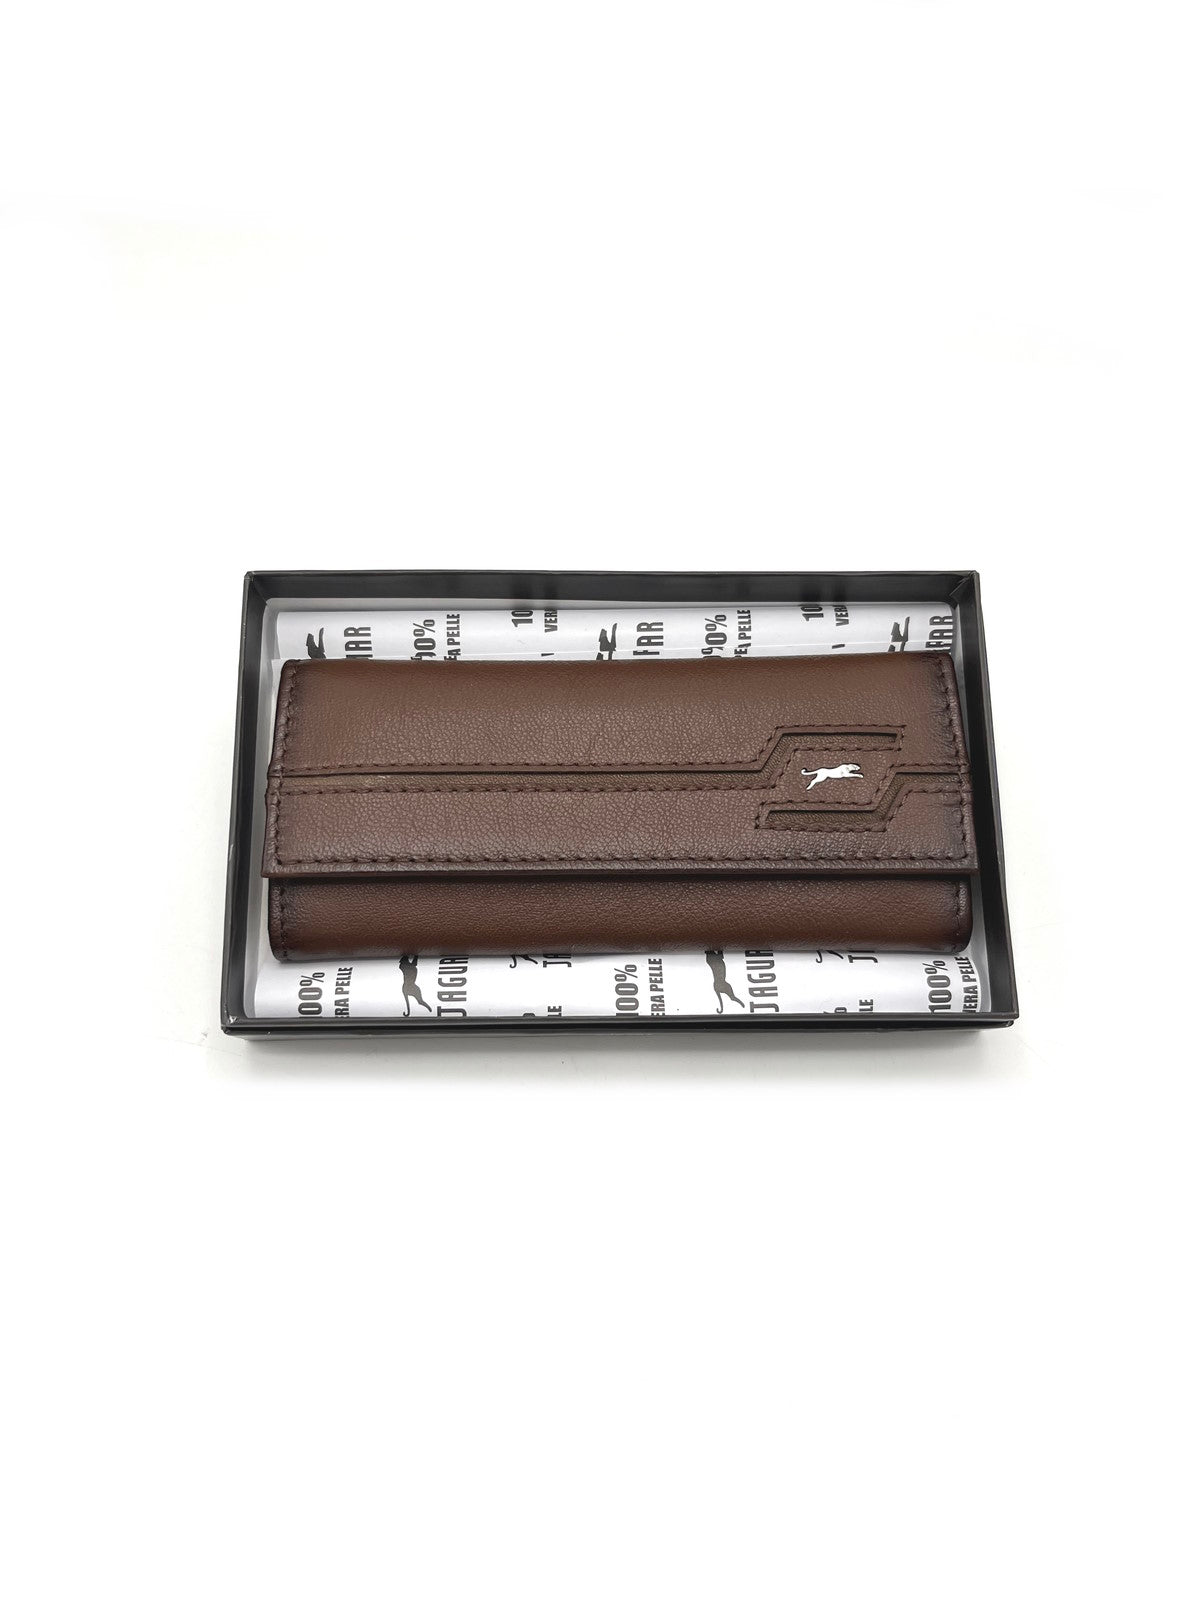 Brand Jaguar, Genuine leather Key Holder, art. PF746-19.062